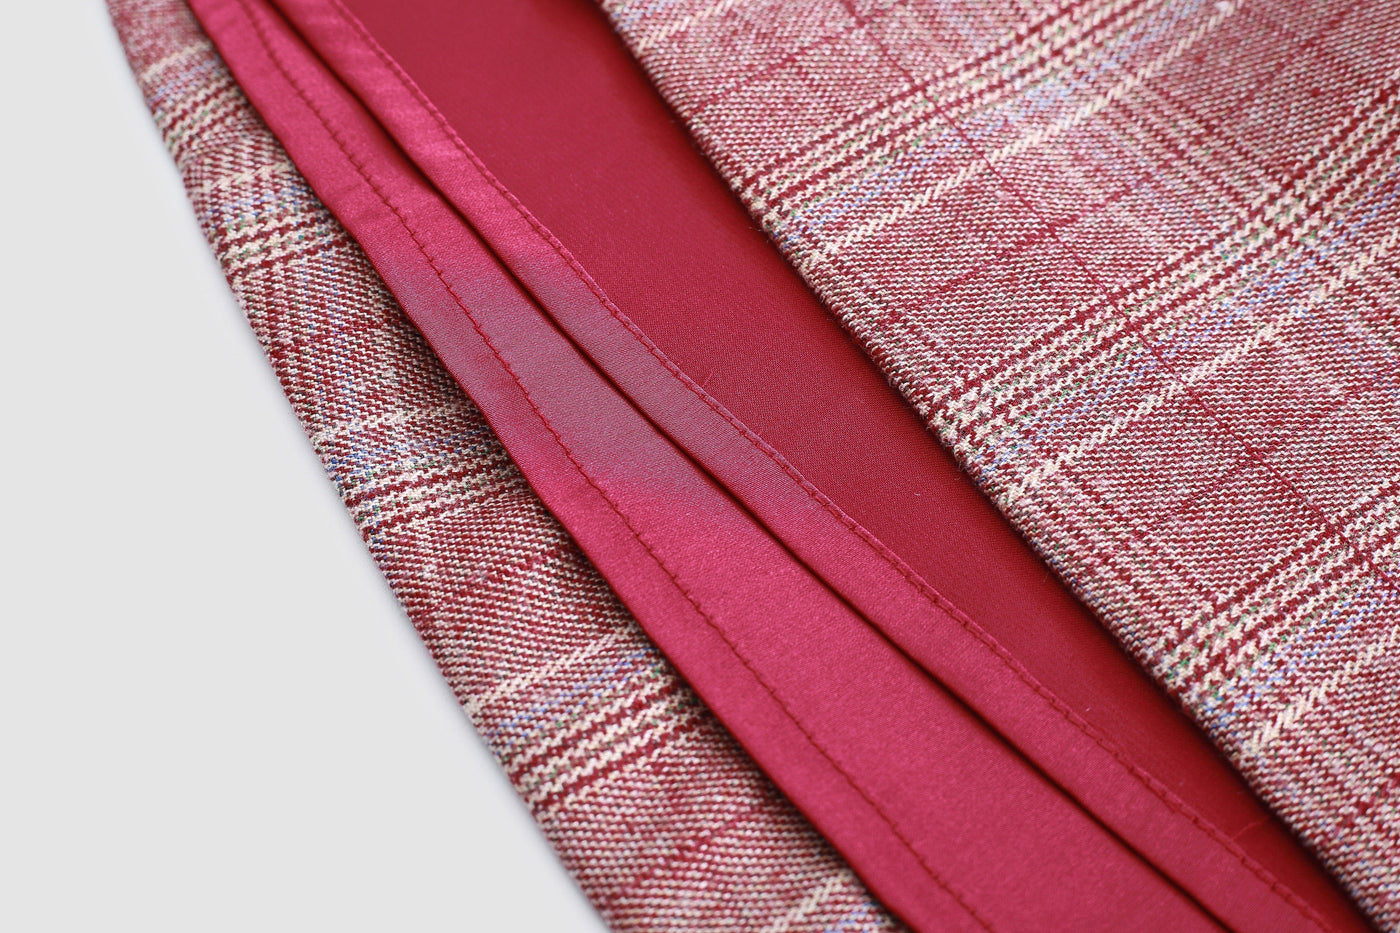 Future 4 | Tartan Wool Skirt in red